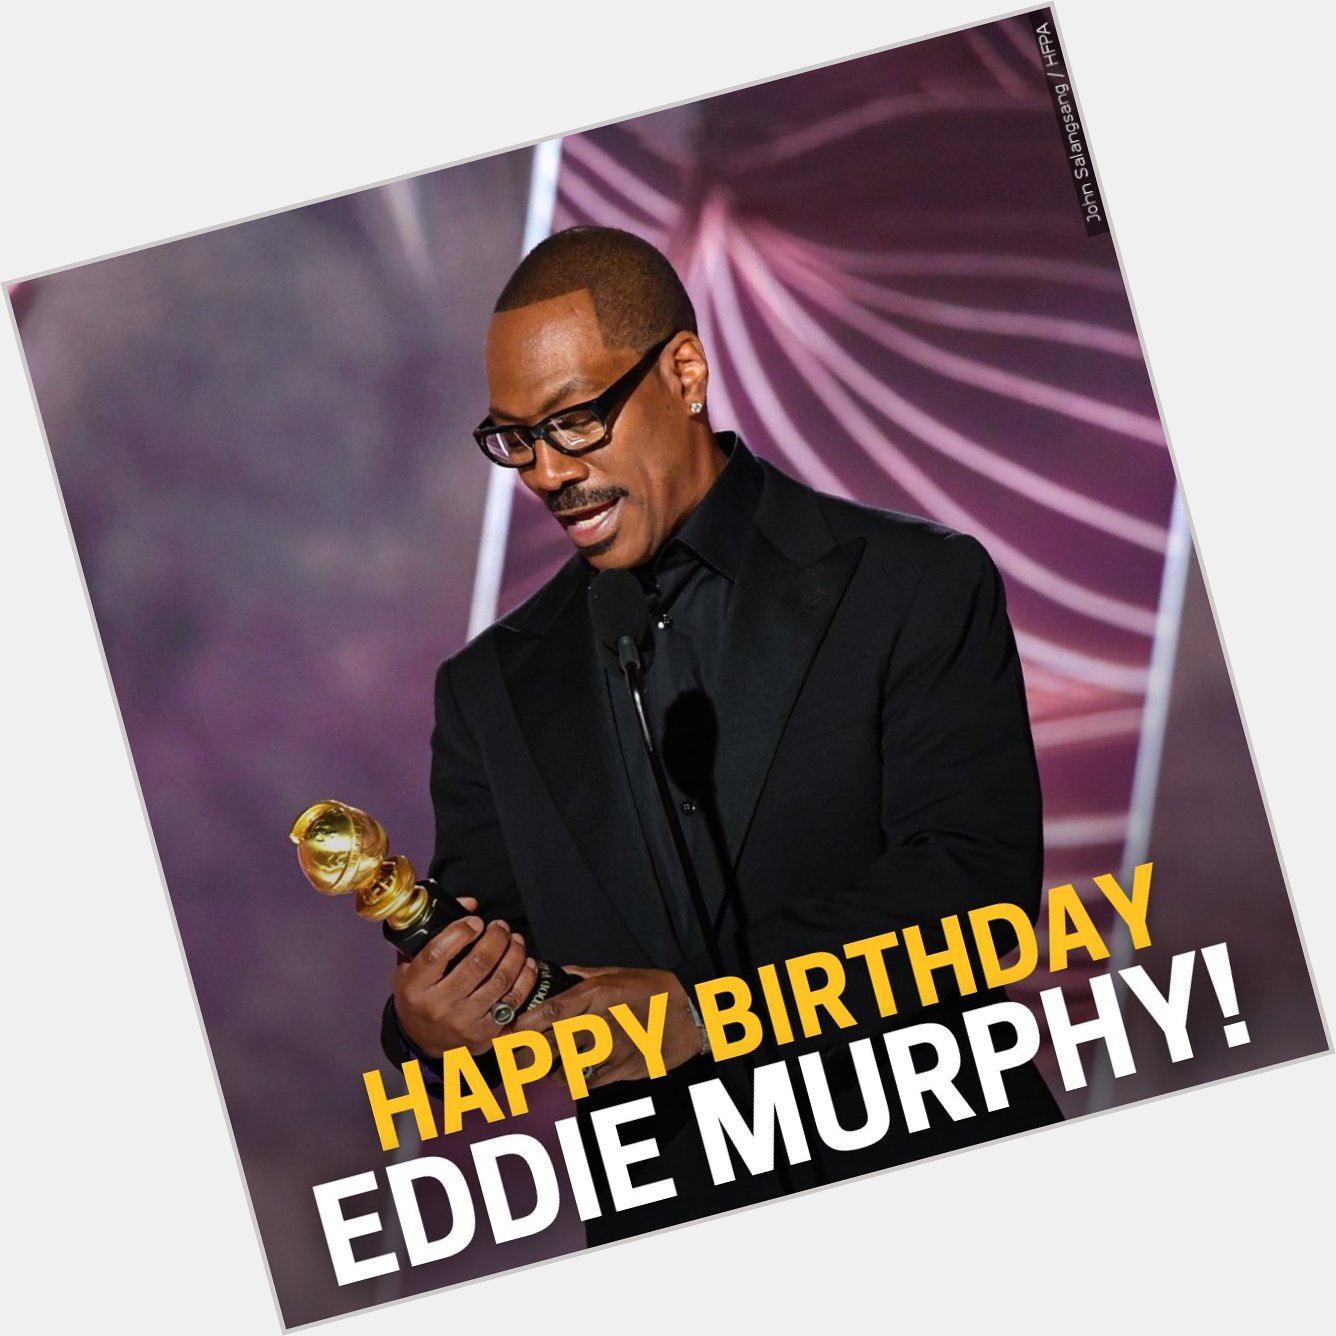 Join us in wishing Eddie Murphy a happy birthday 